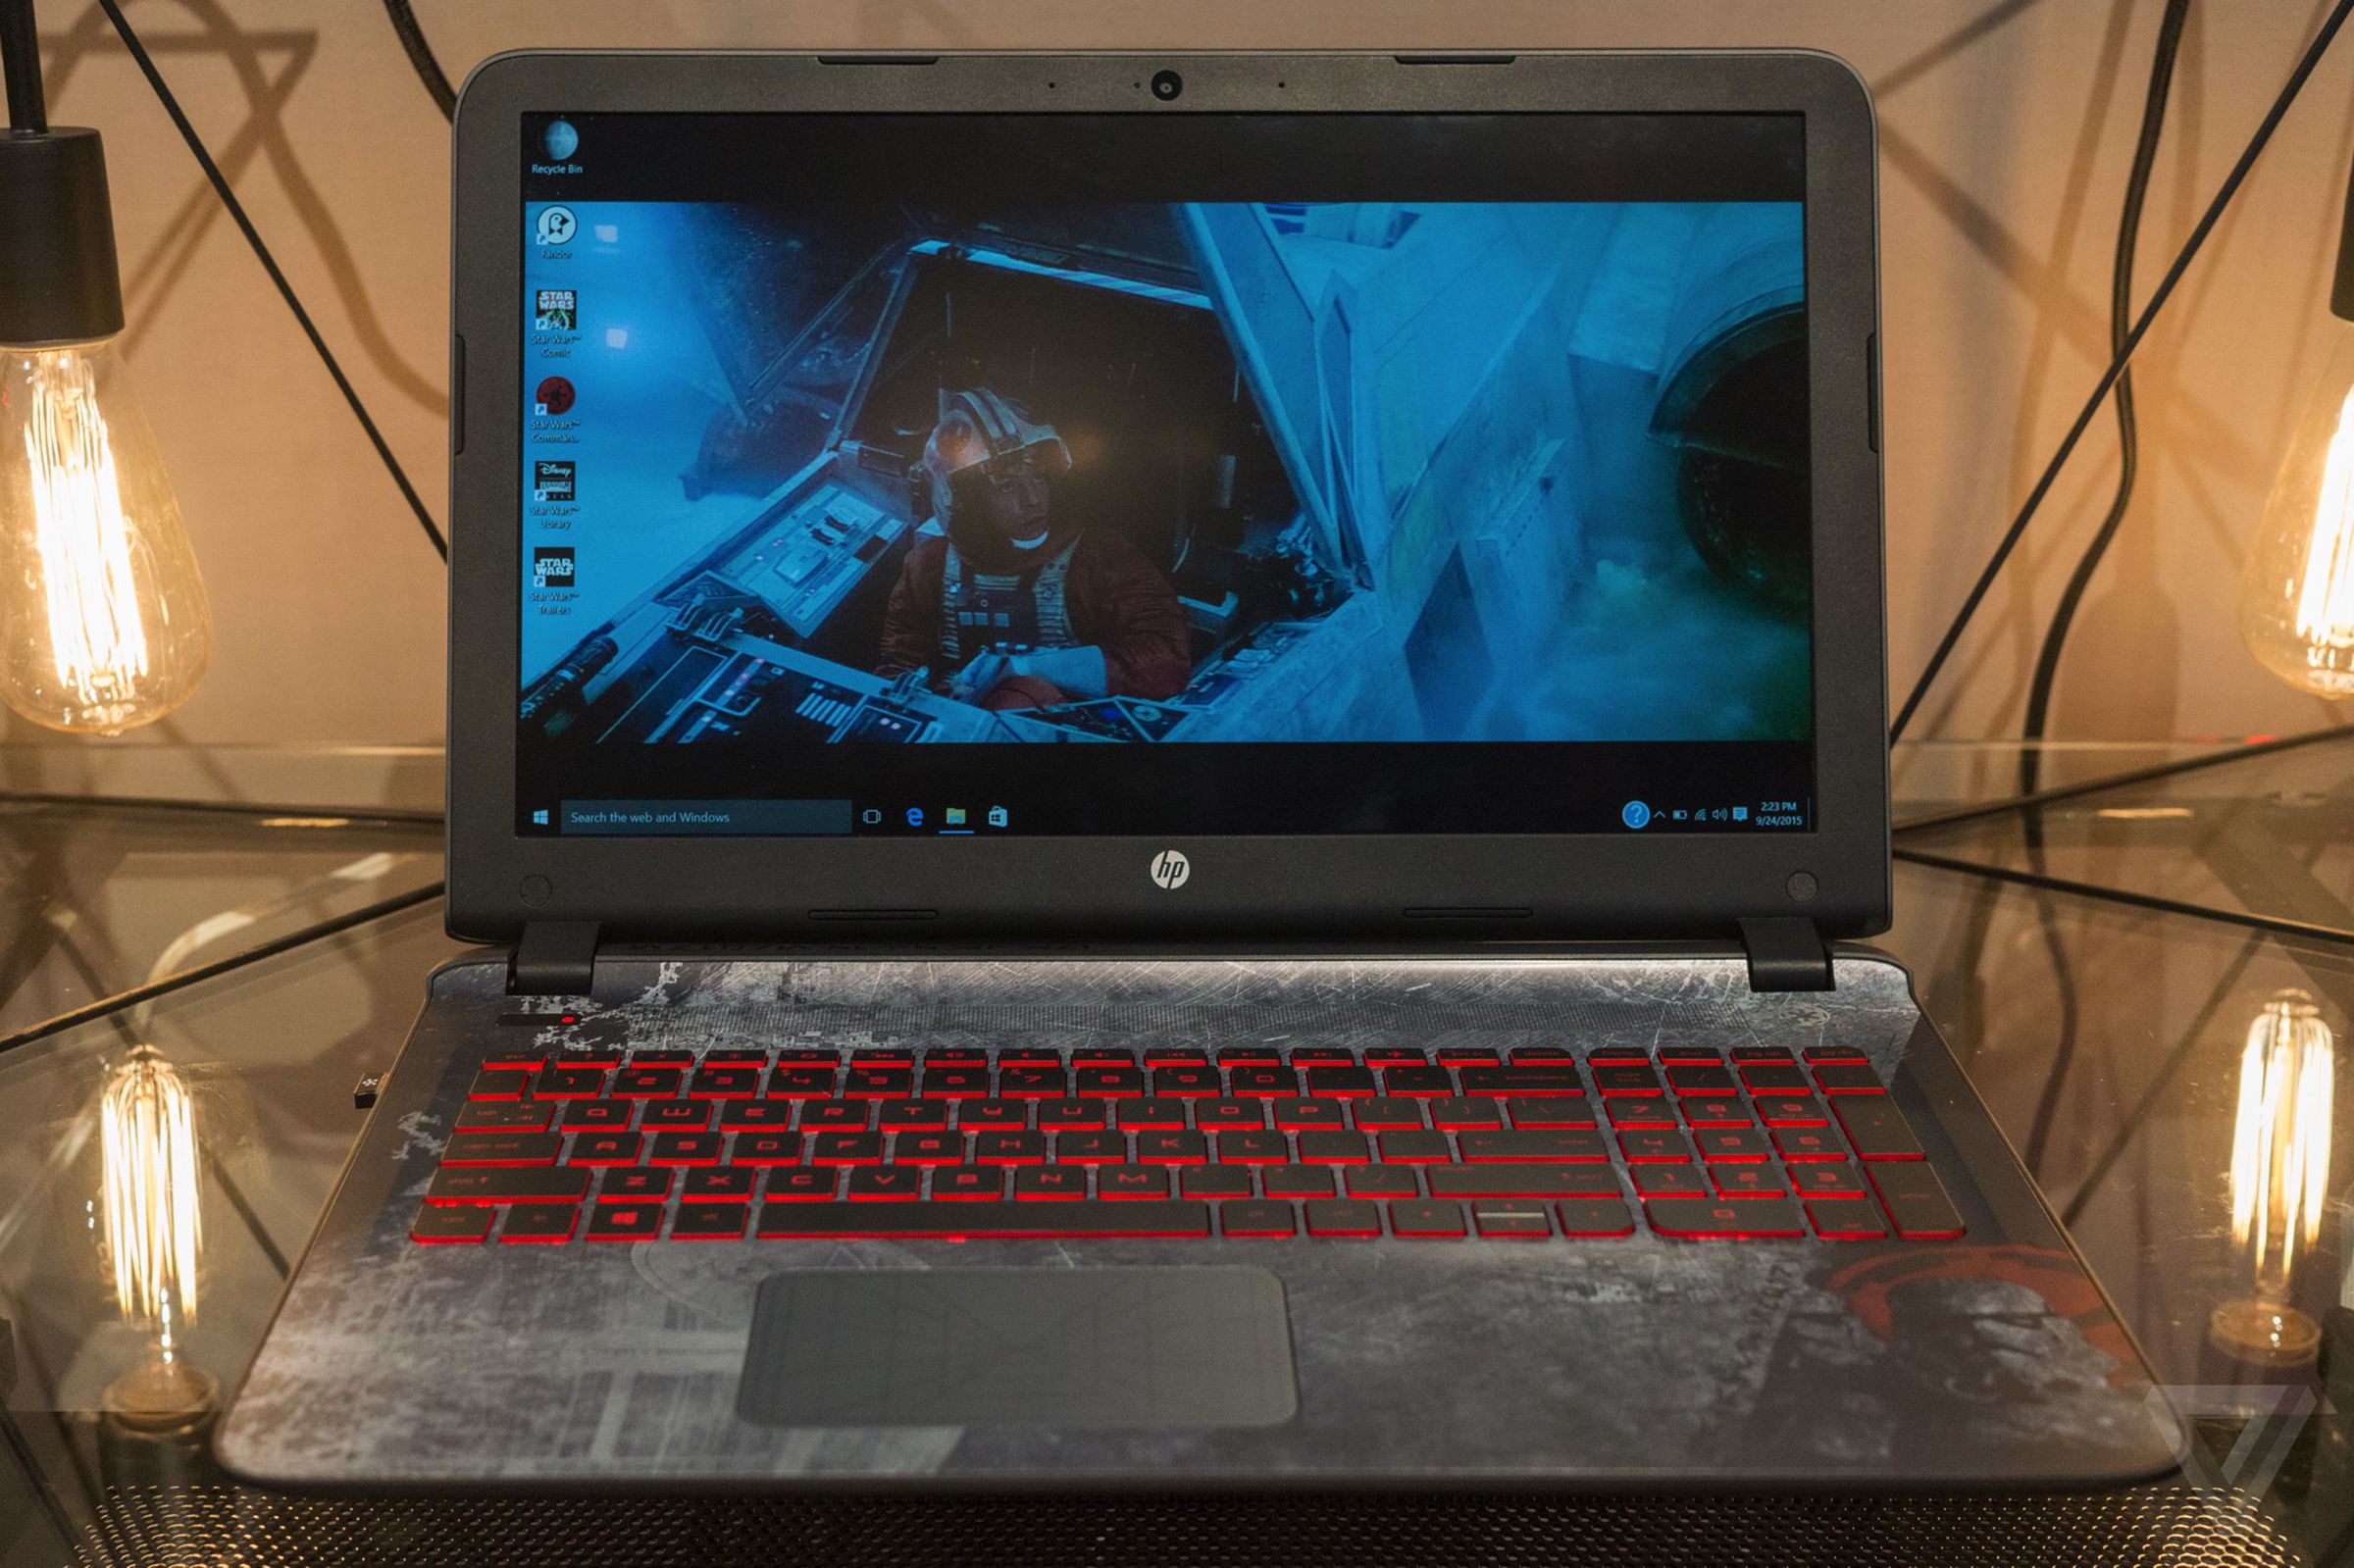 HP Star Wars laptop